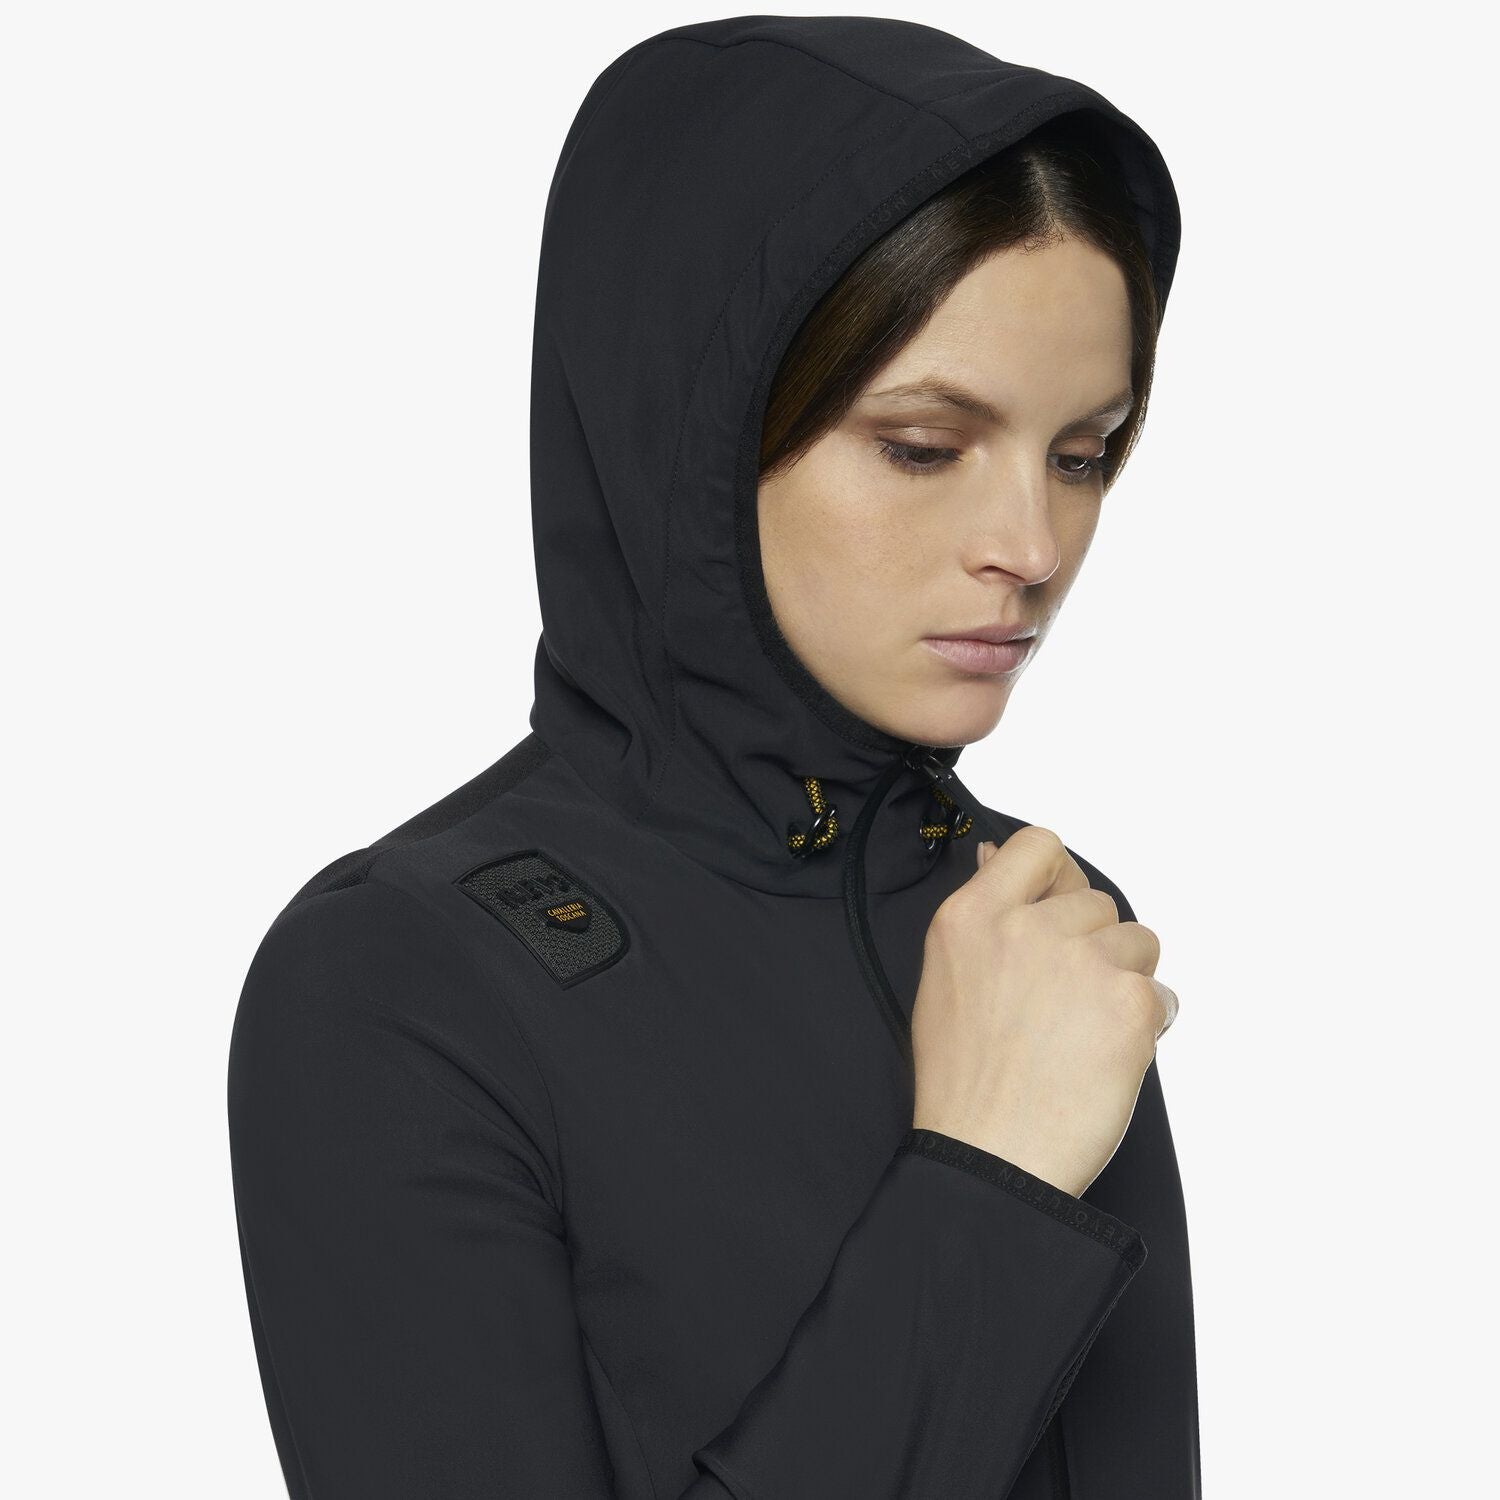 Cavalleria Toscana R-Evo Jersey + Tech Knit Hooded Softshell Jacket